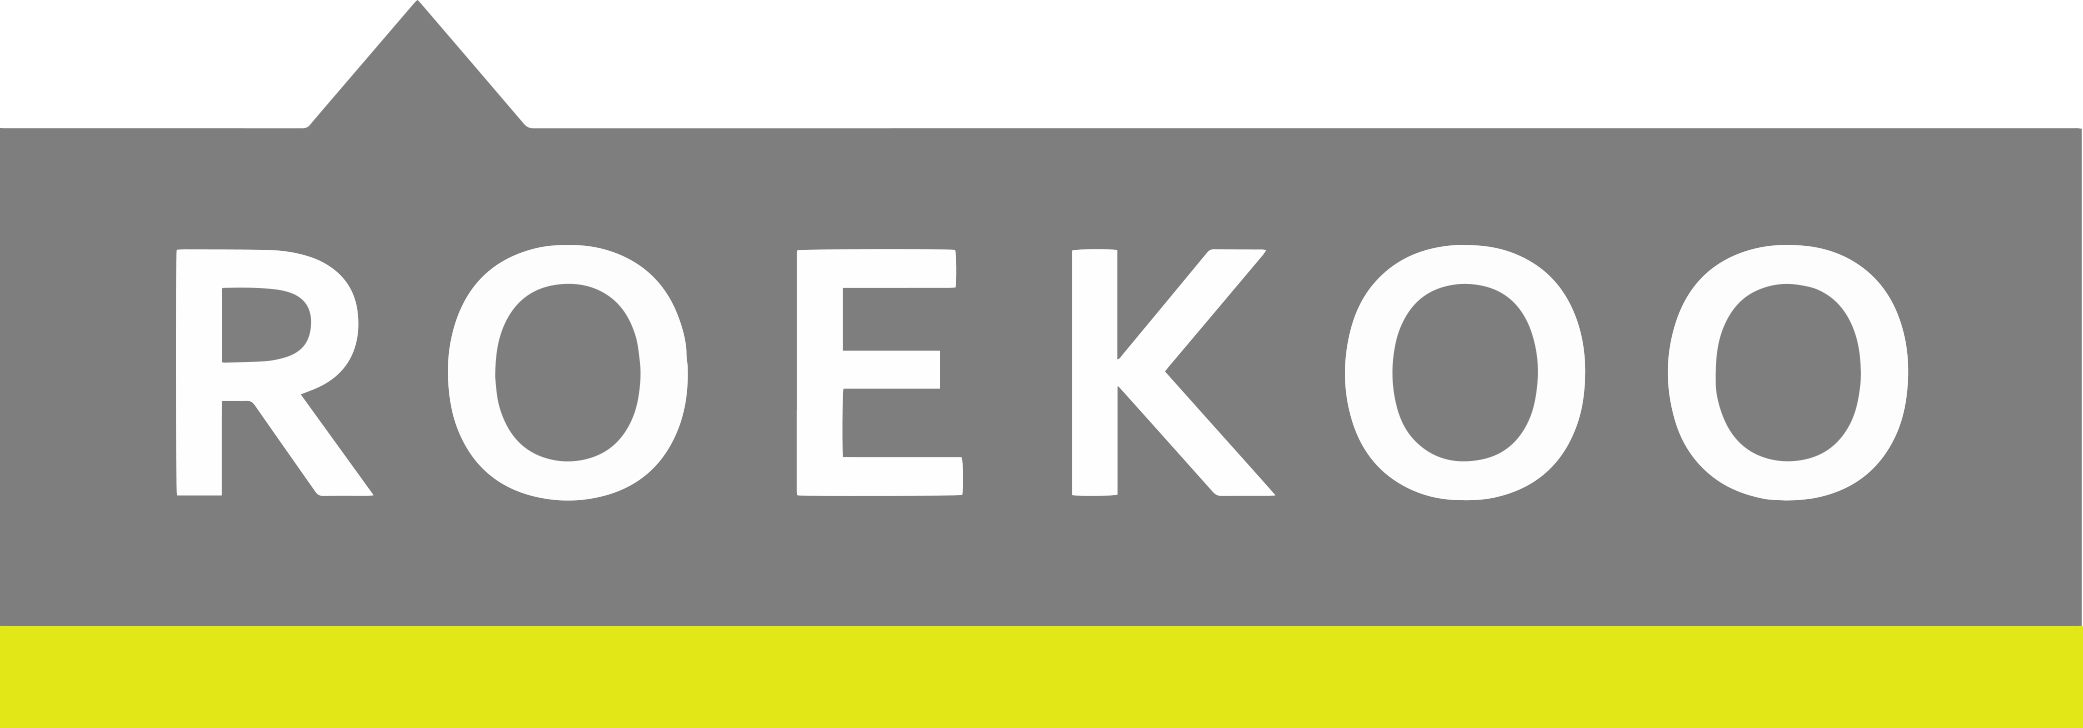 ROEKOO-logo